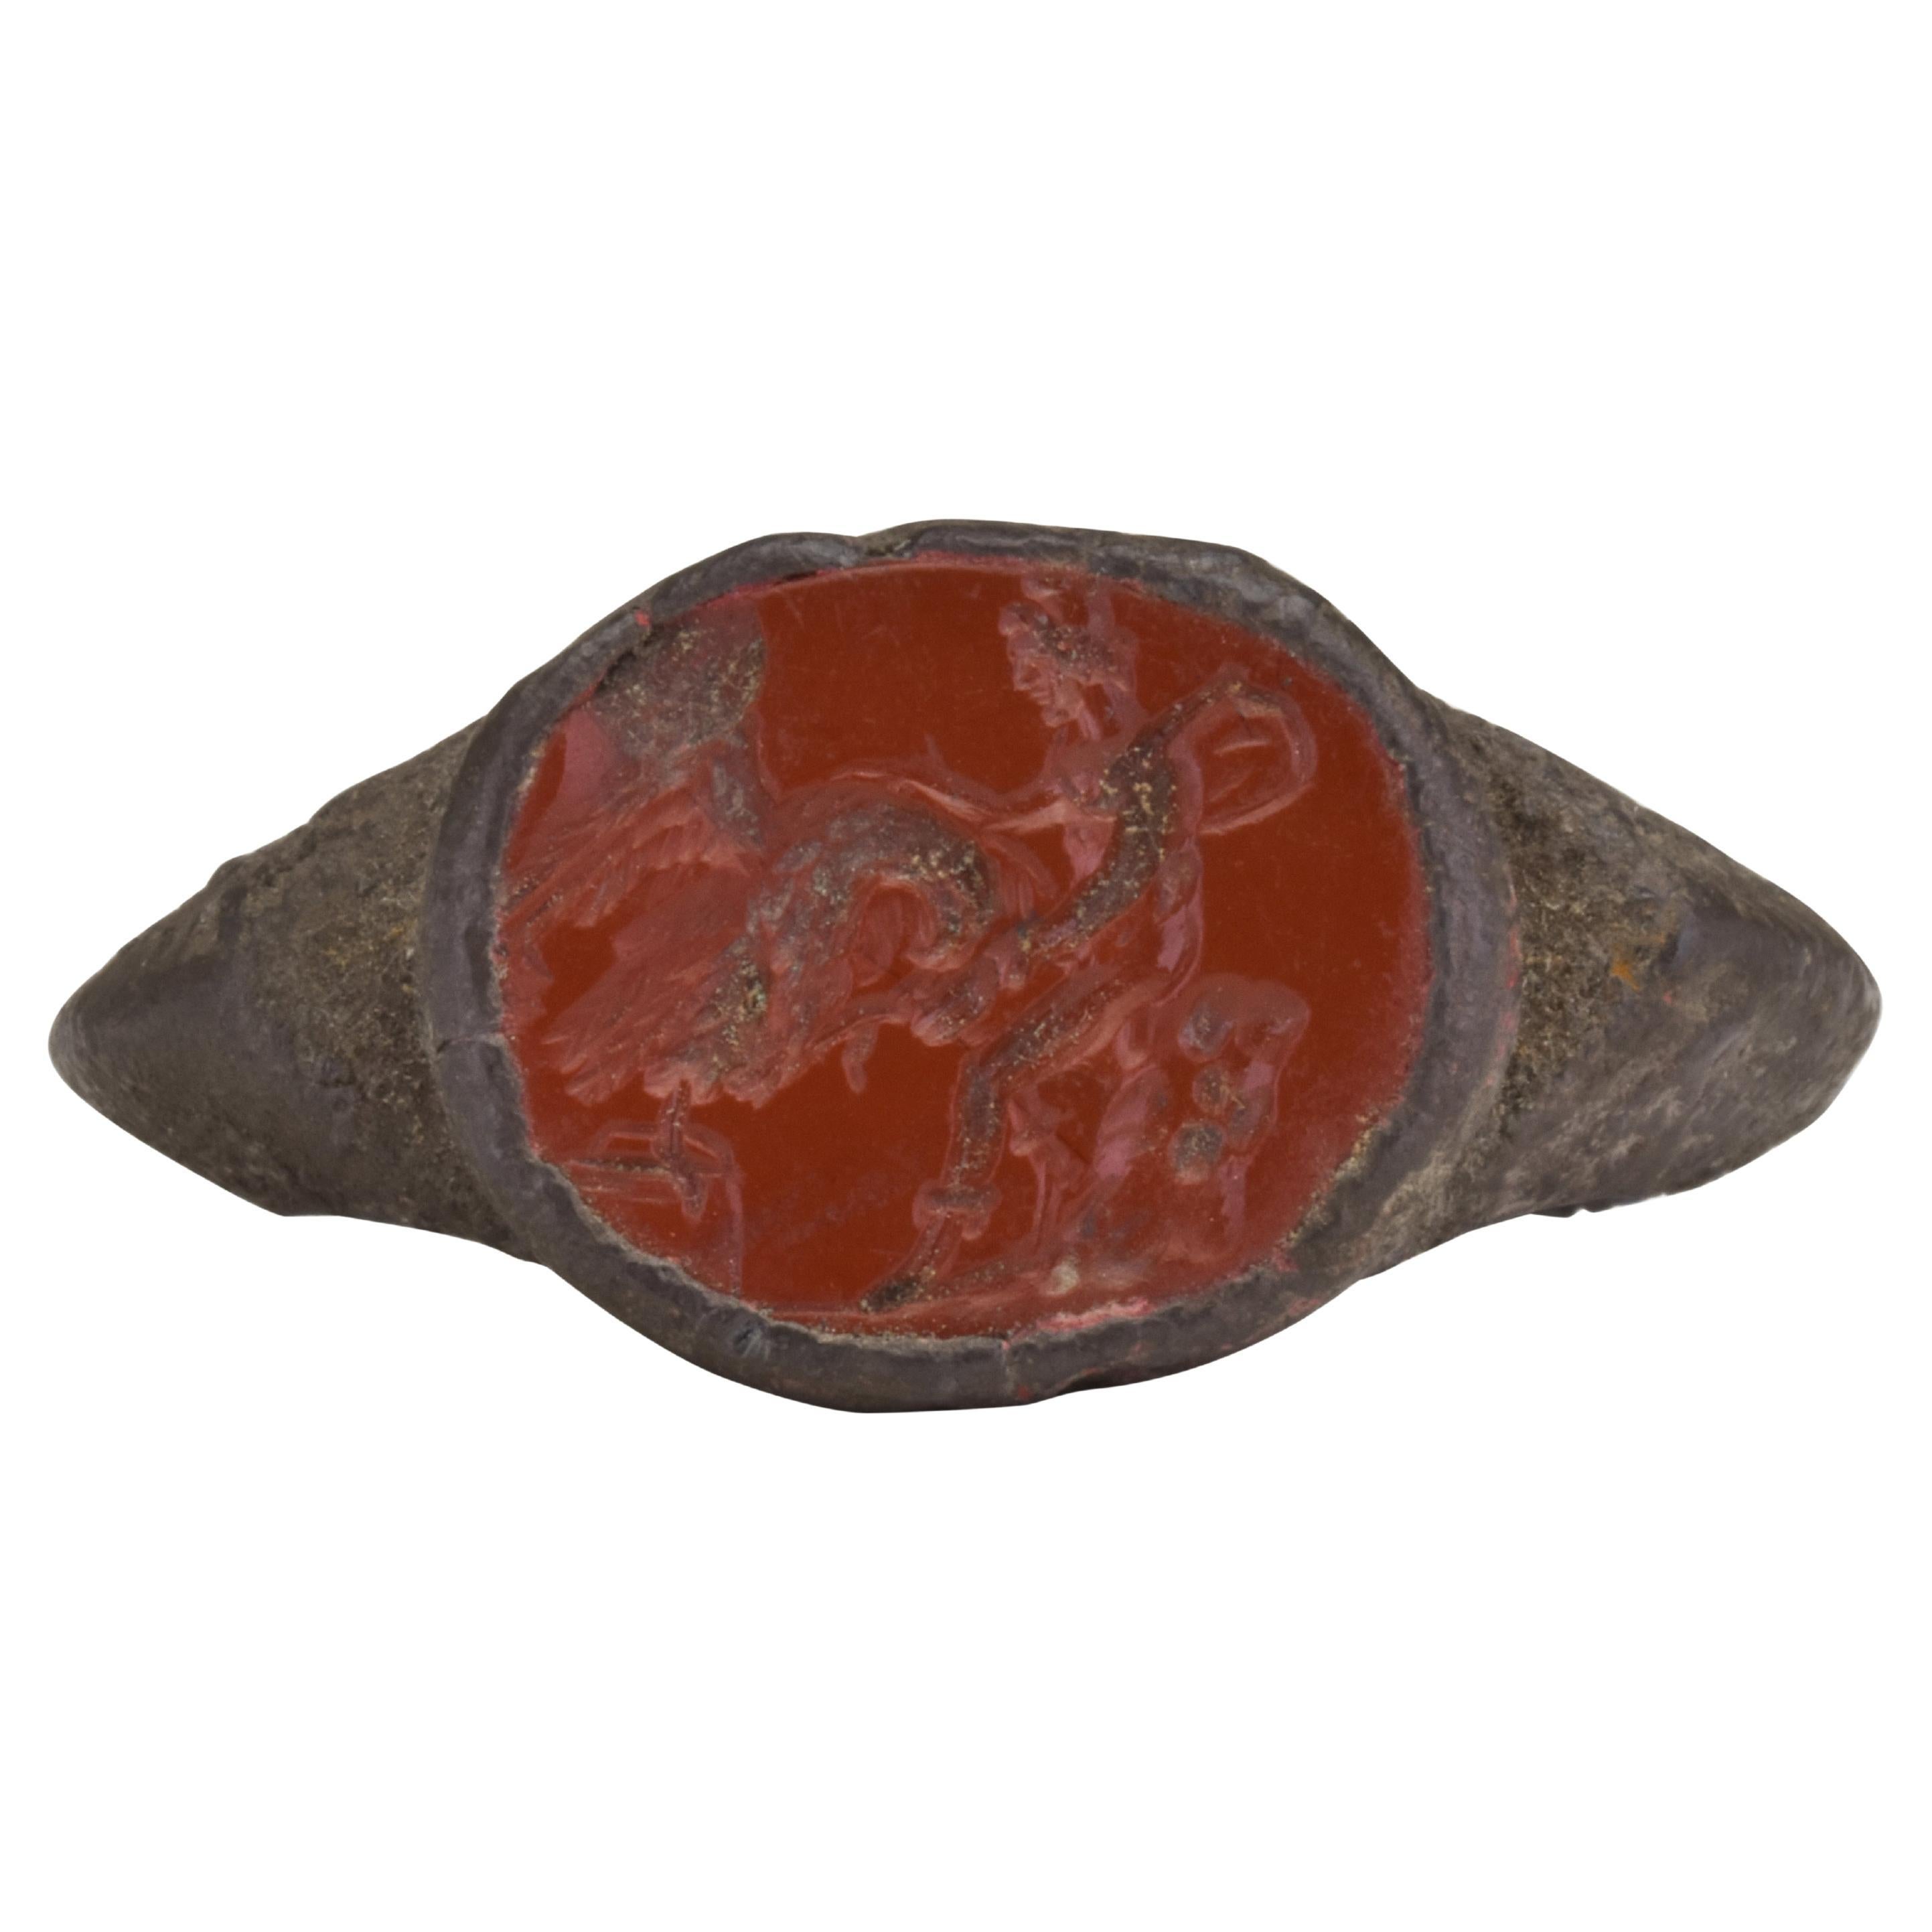 Ancient Greco-Roman Silver Signet Ring with Red Jasper Intaglio